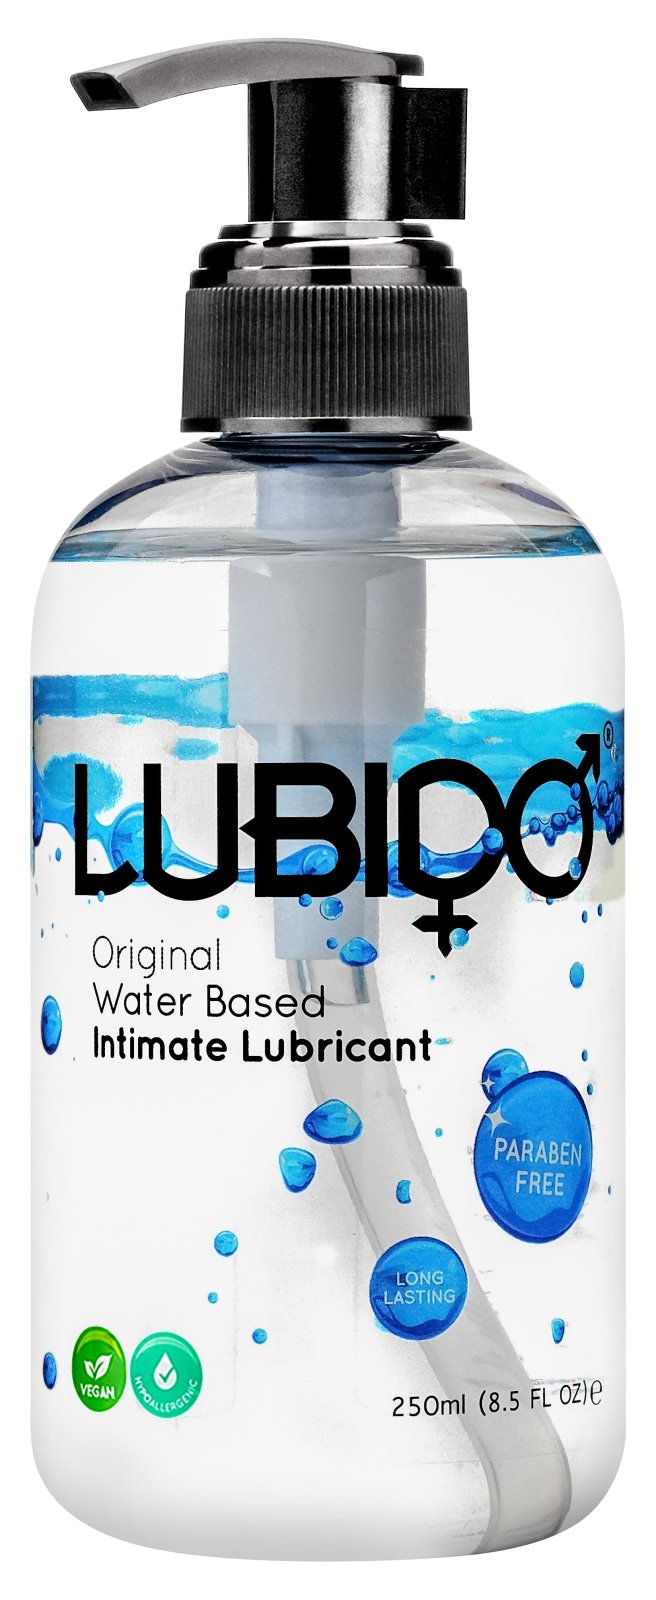 Women’s Lingerie Lubido Original Water Based Paraben Free Intimate Gel Lube - 250ml Lube Lubido   